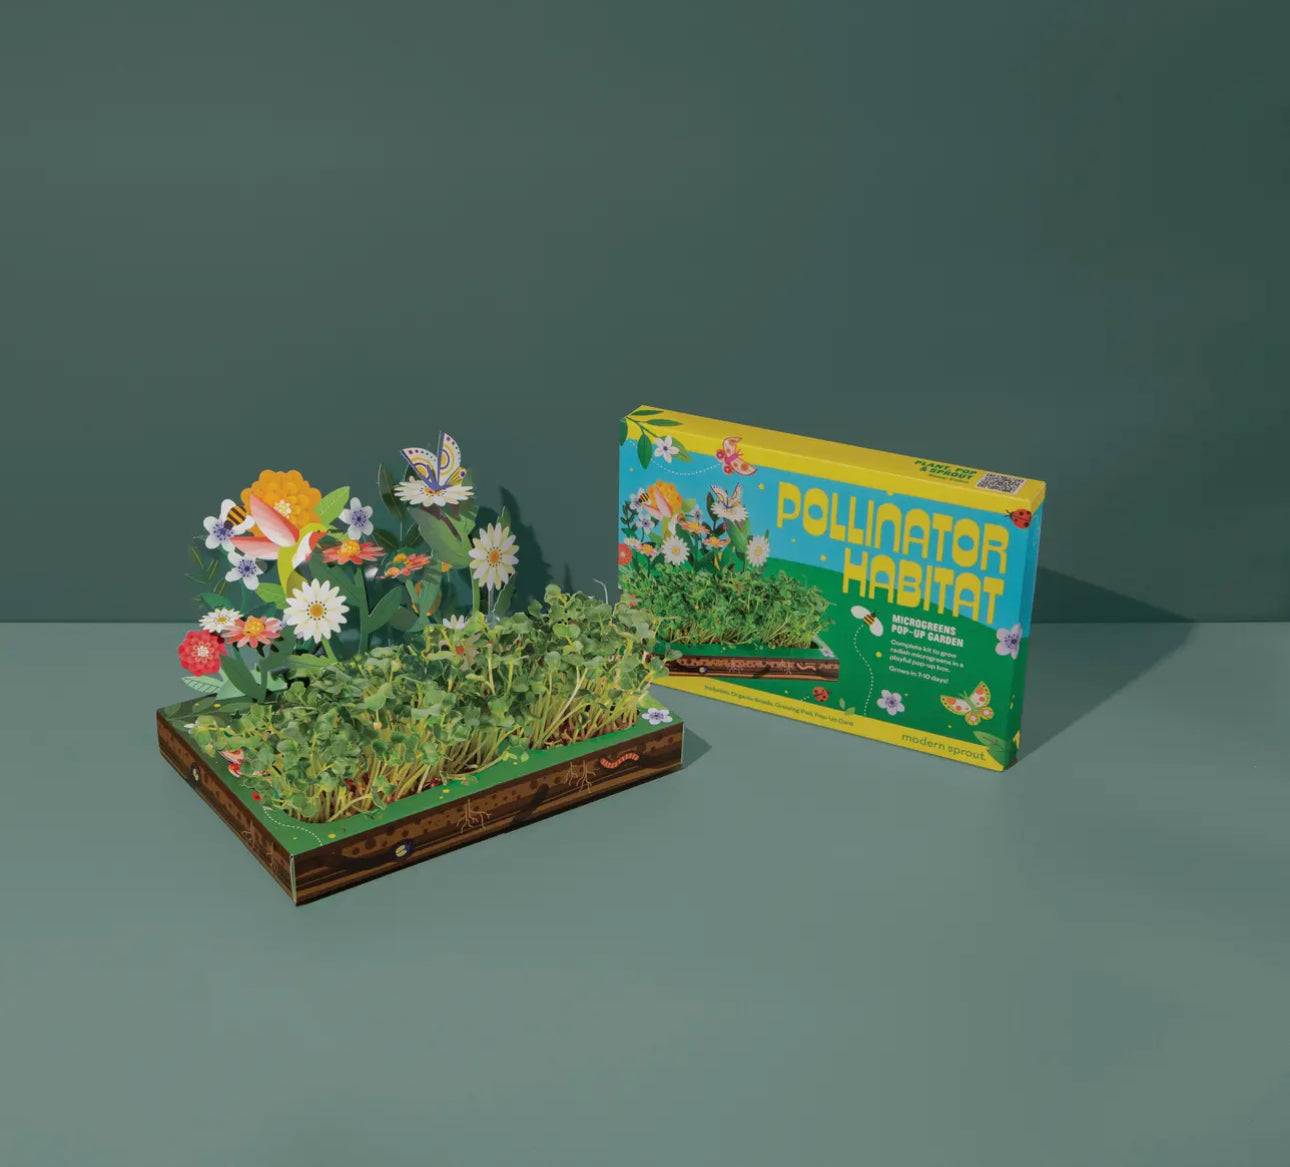 Microgreens - Pollinator Habitat